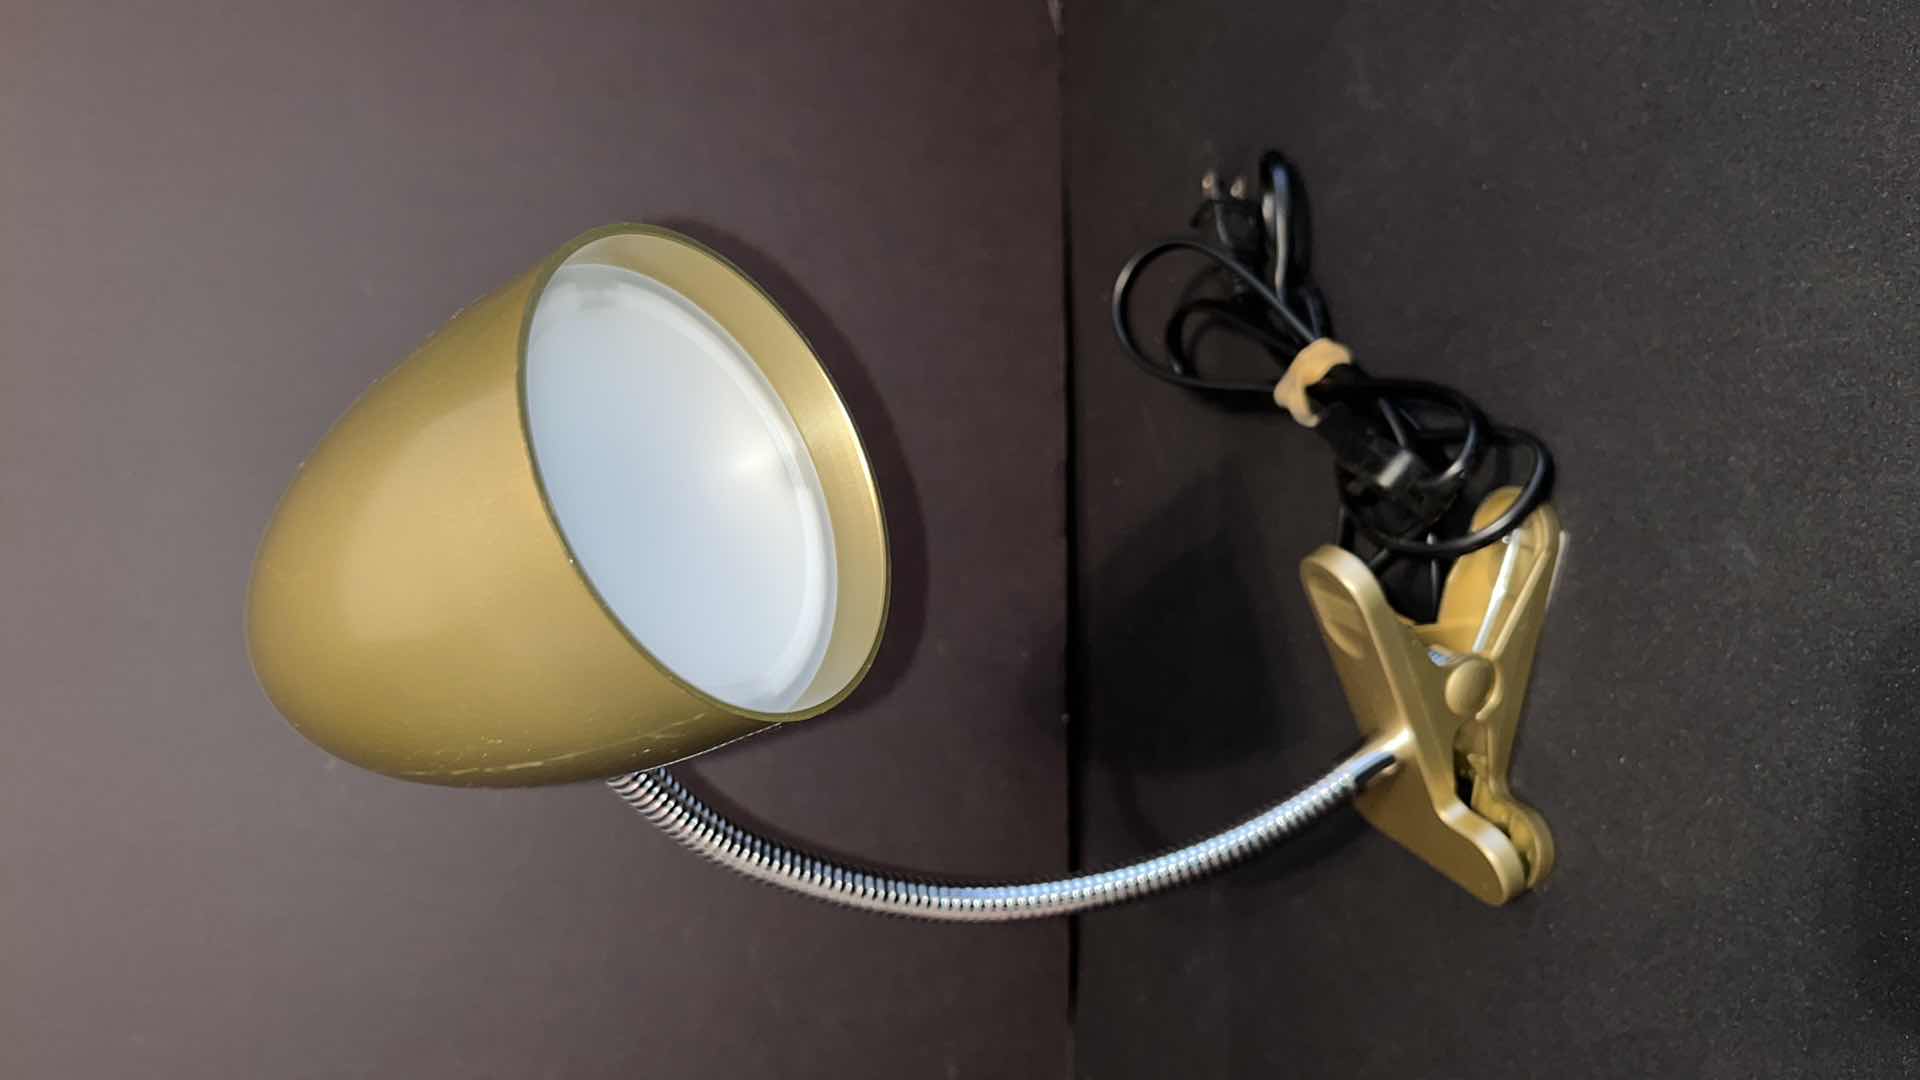 Photo 6 of HONEYWELL 8.5” CIRCULAR FAN (HT-900), INTERTEK BRONZE CLIP-ON DESK LAMP & SHARP DIGITAL ALARM CLOCK